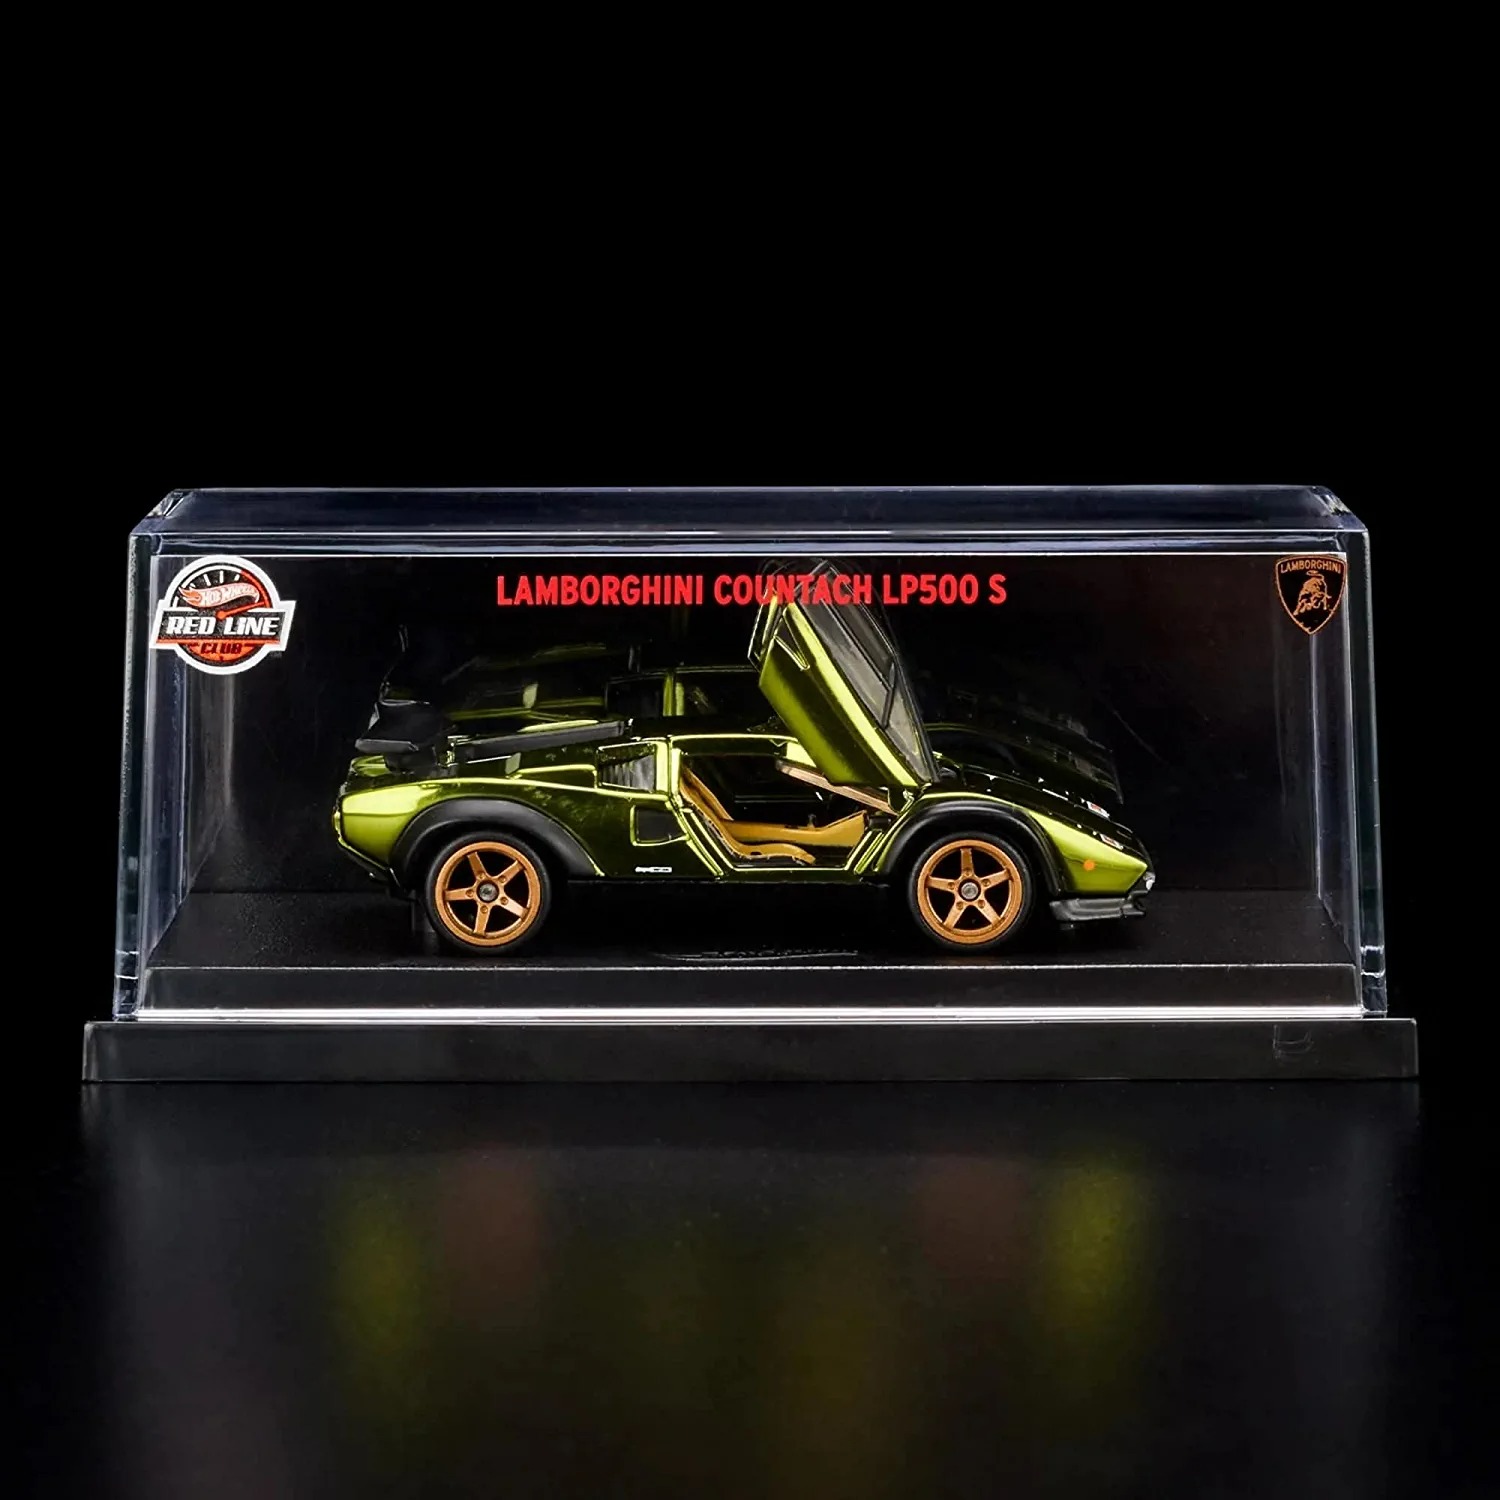 Hot Wheels '82 Lamborghini Countach LP500 S RLC Exclusive-1